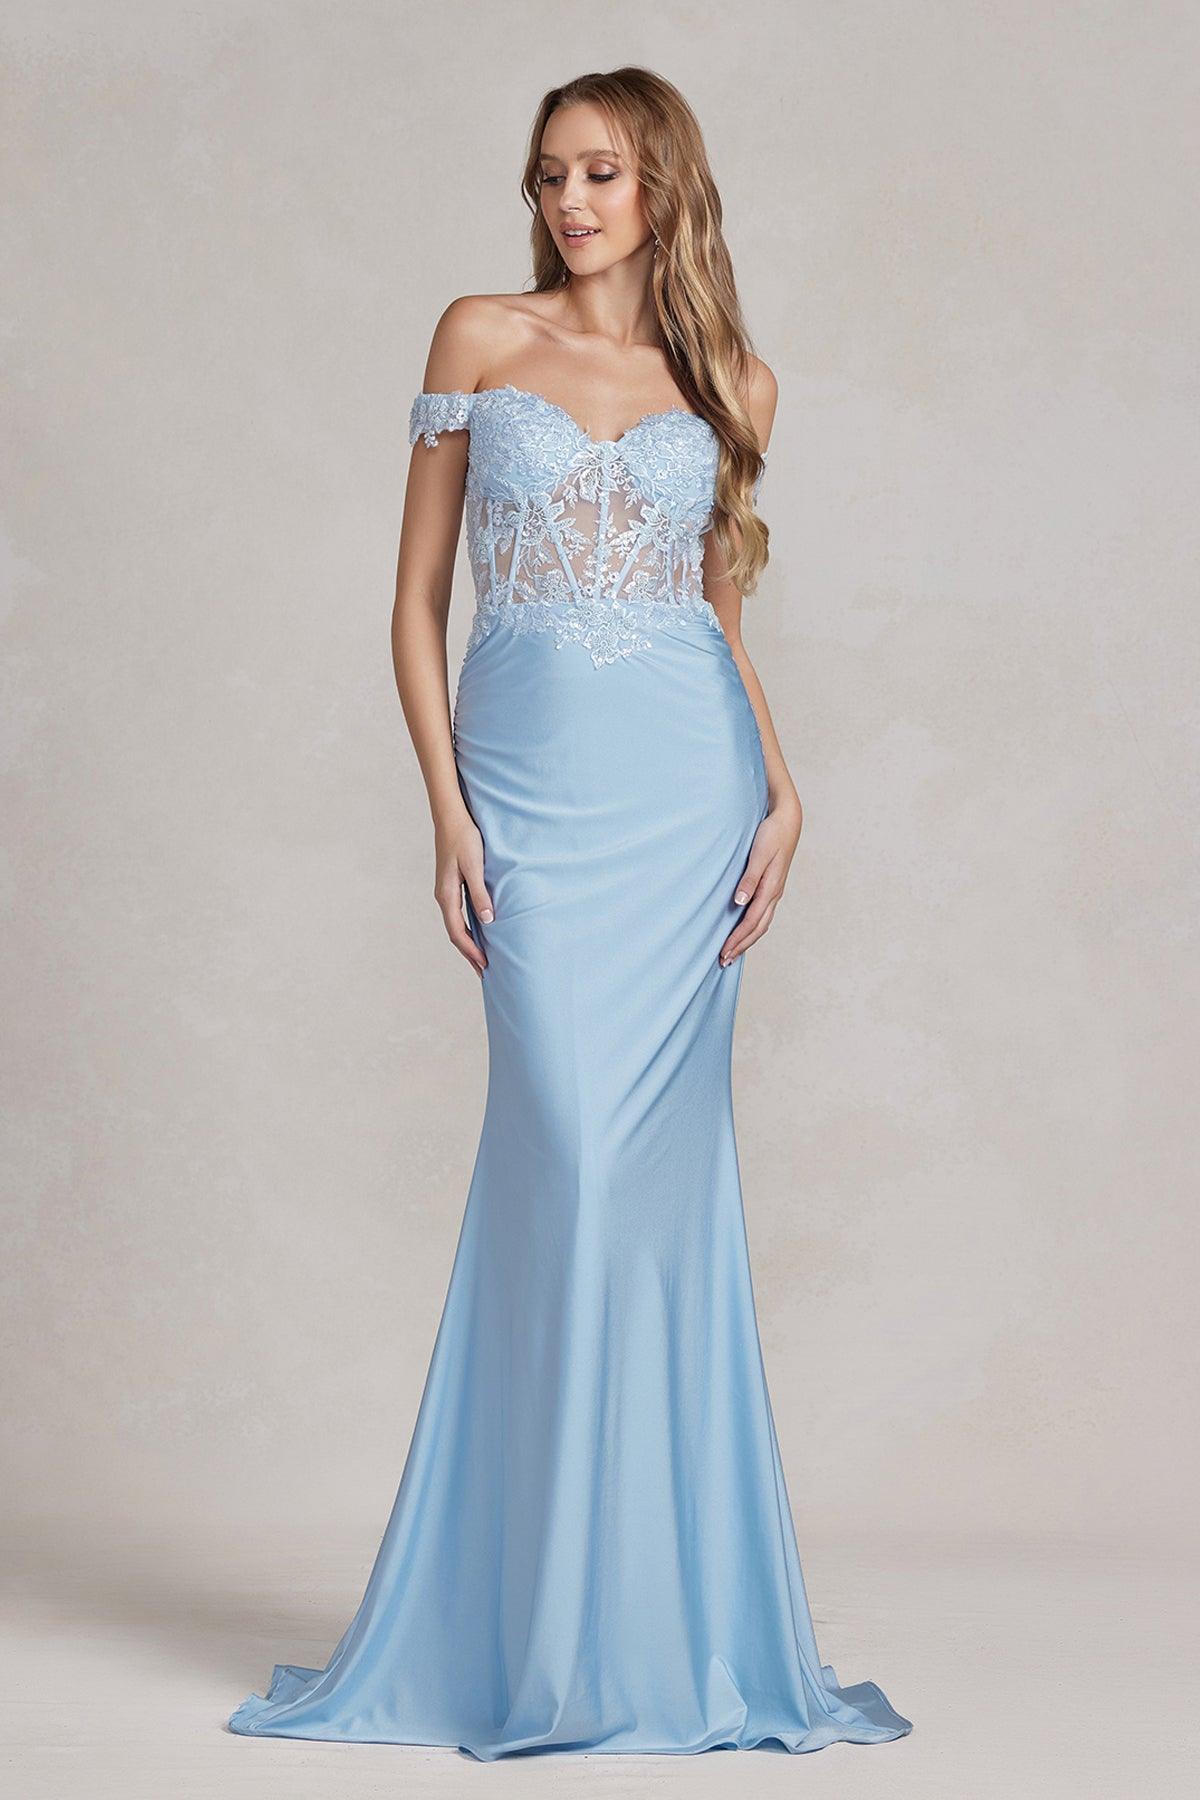 Nox Anabel E1184 Long Off Shoulder Prom Dress